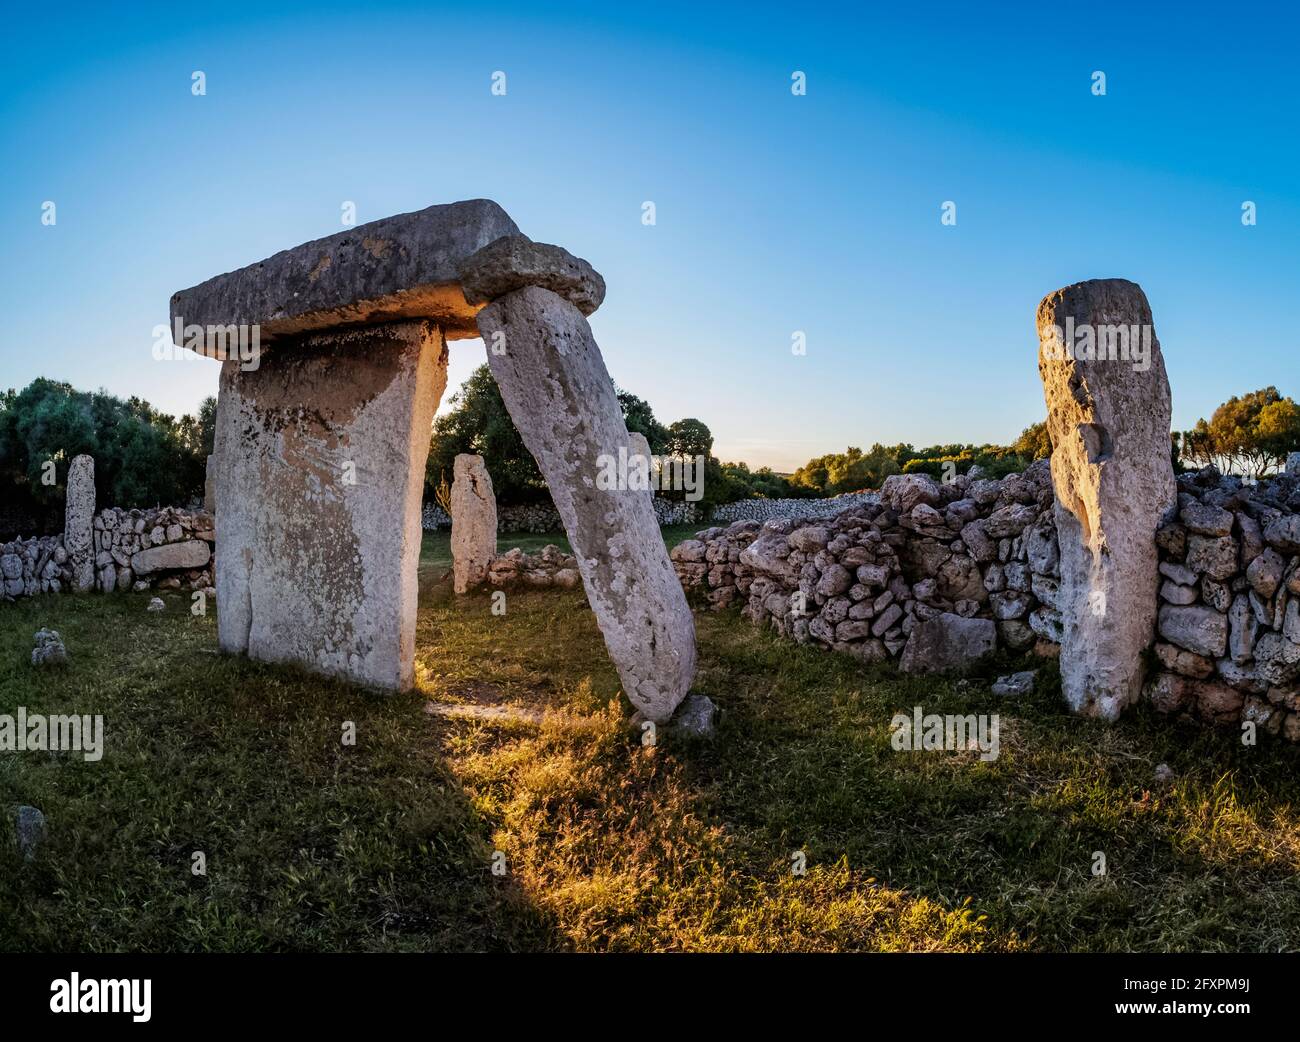 Taula al atardecer, yacimiento arqueológico de Talati de Dalt, Menorca, Islas Baleares, España, Mediterráneo, Europa Foto de stock